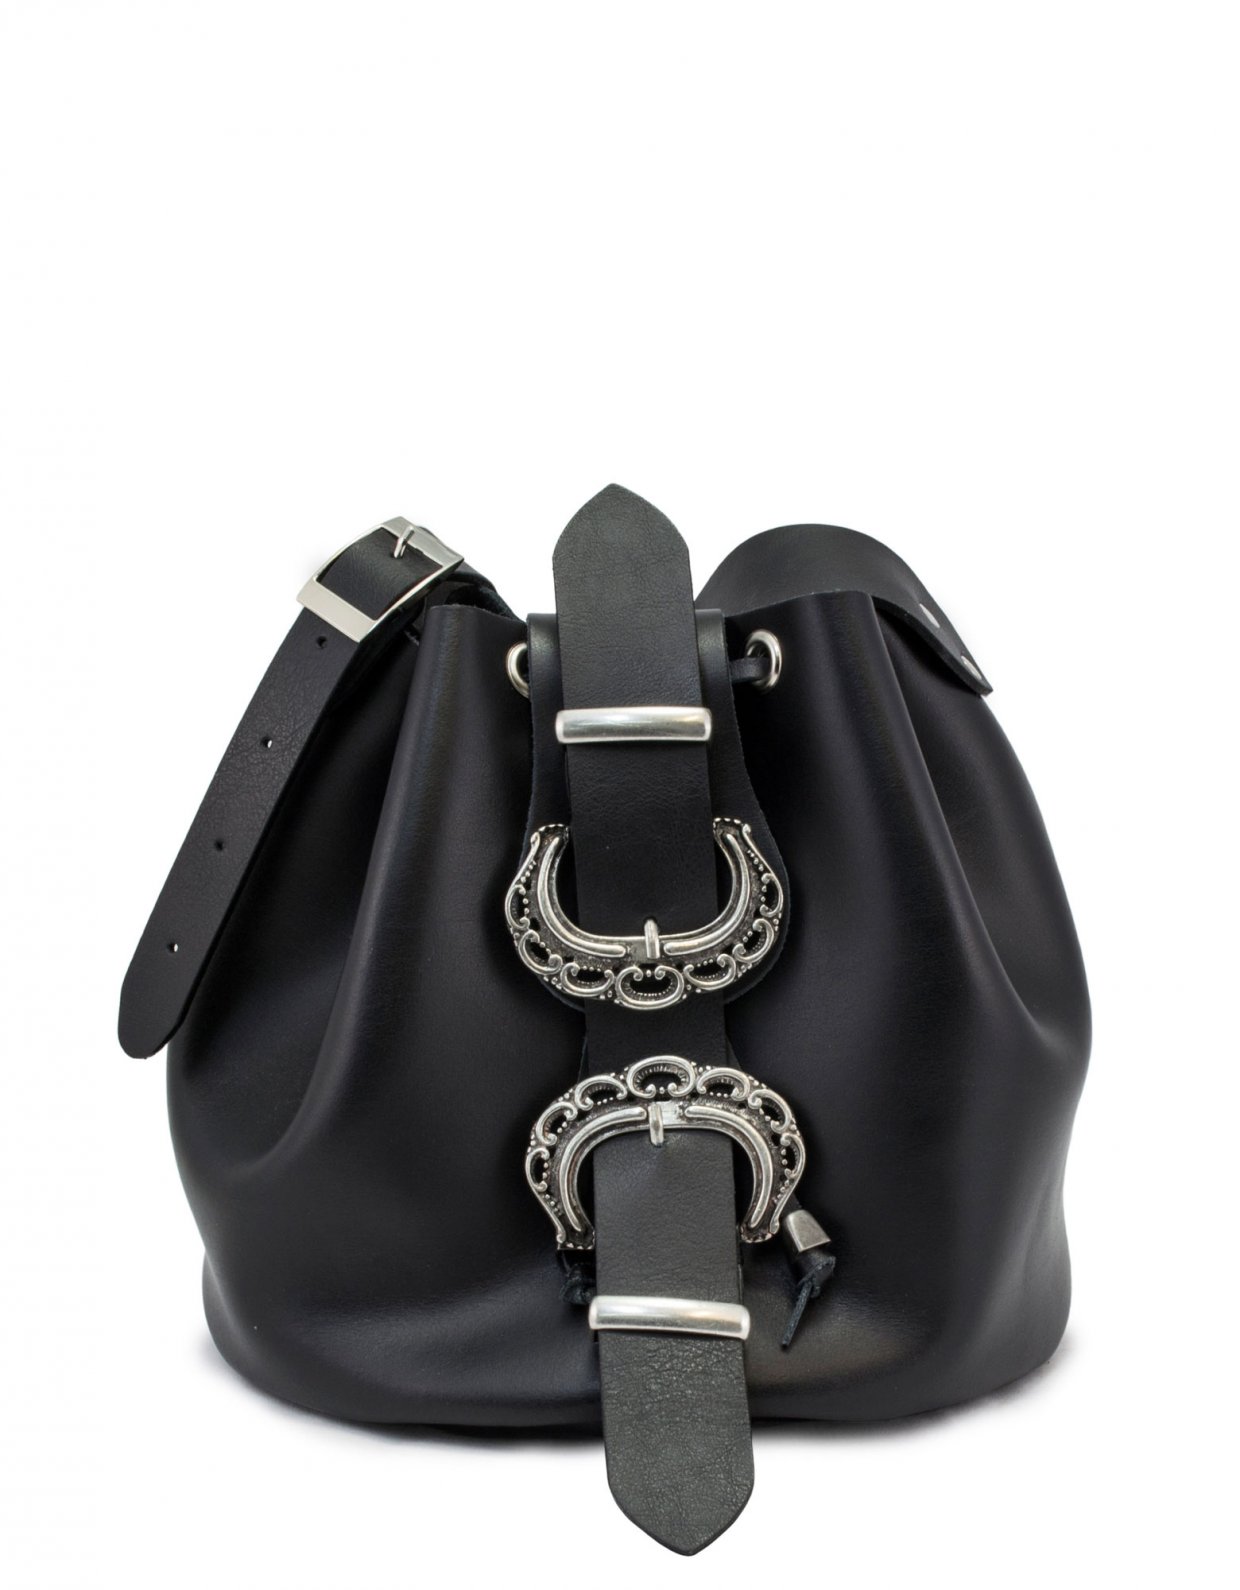 Individual Art Leather Everloving black bag